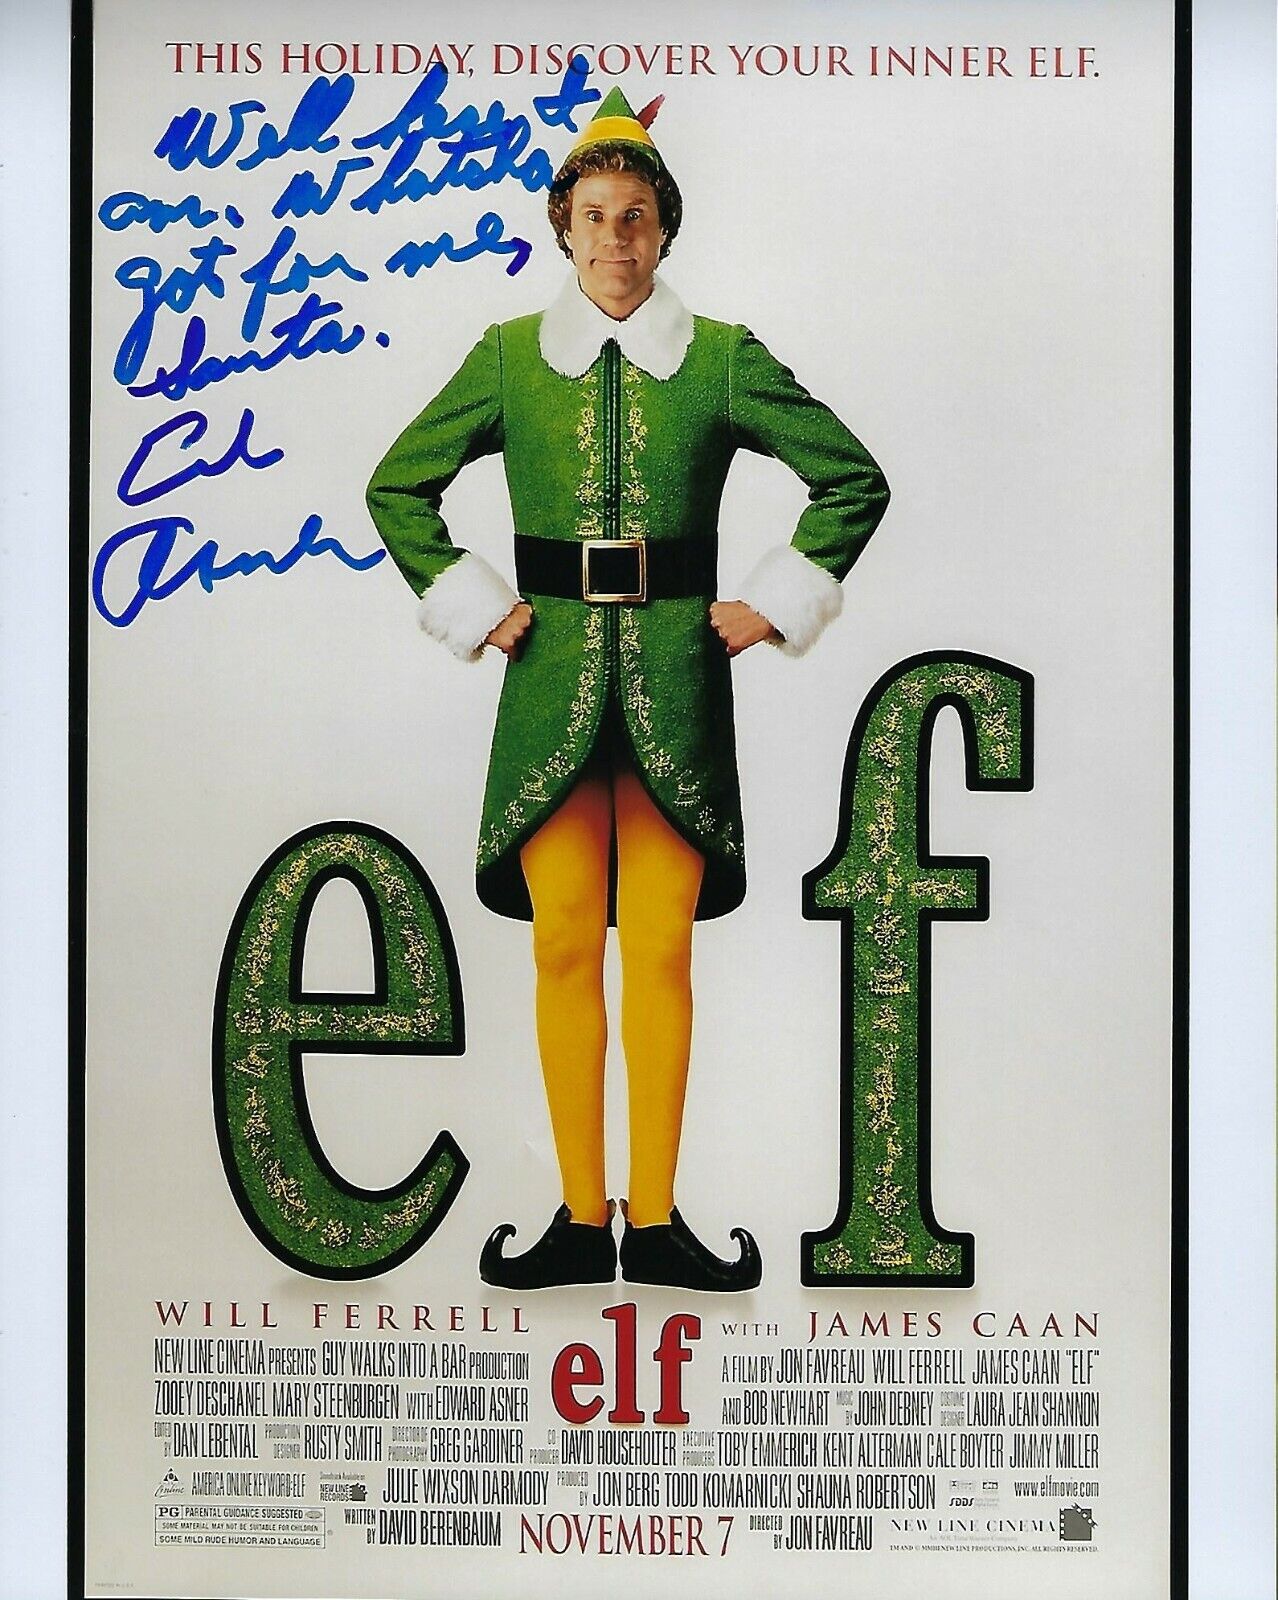 GFA Elf Santa Movie Star * ED ASNER * Signed 8x10 Photo Poster painting E8 COA